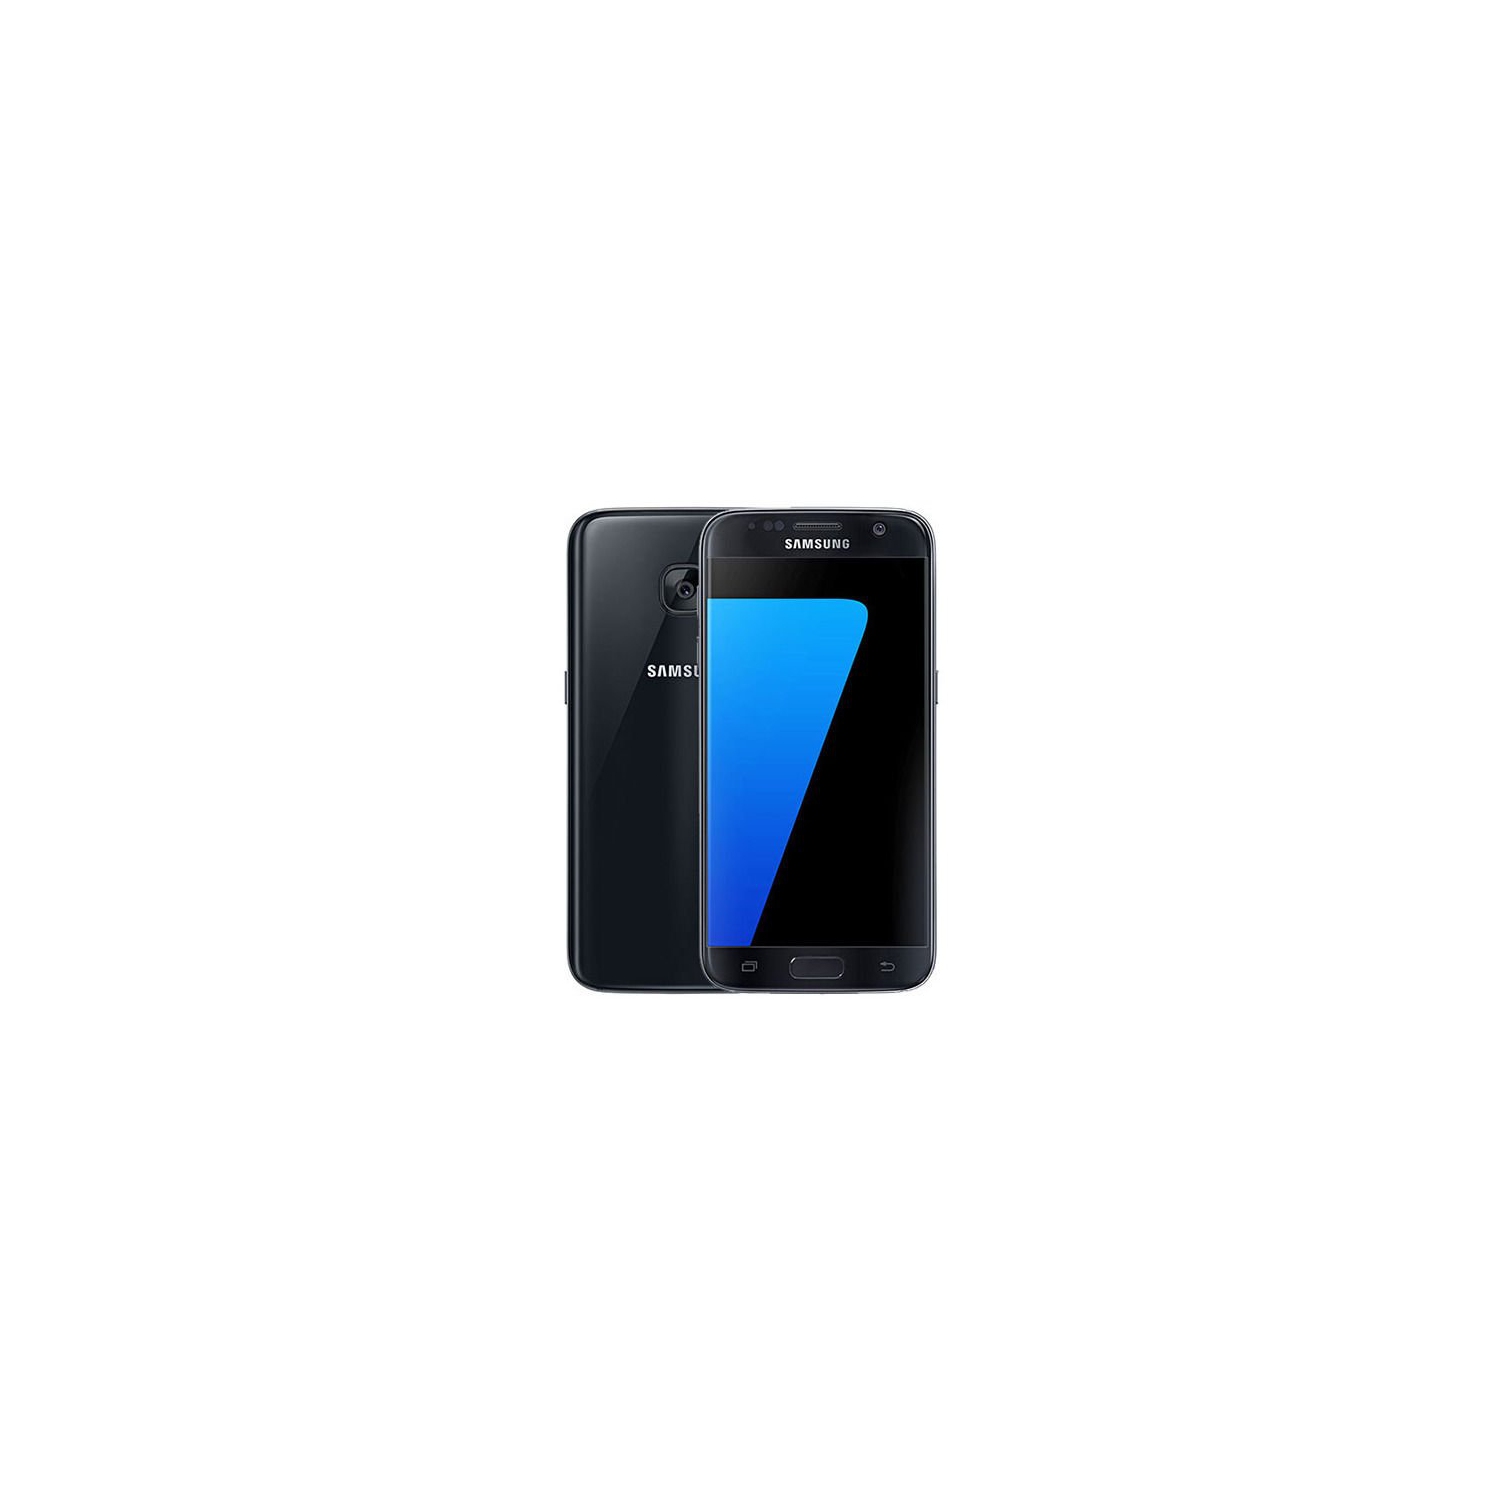 Refurbished (Excellent) - Samsung Galaxy S7 32GB Smartphone - Black Onyx - Unlocked - Certified Refurbished